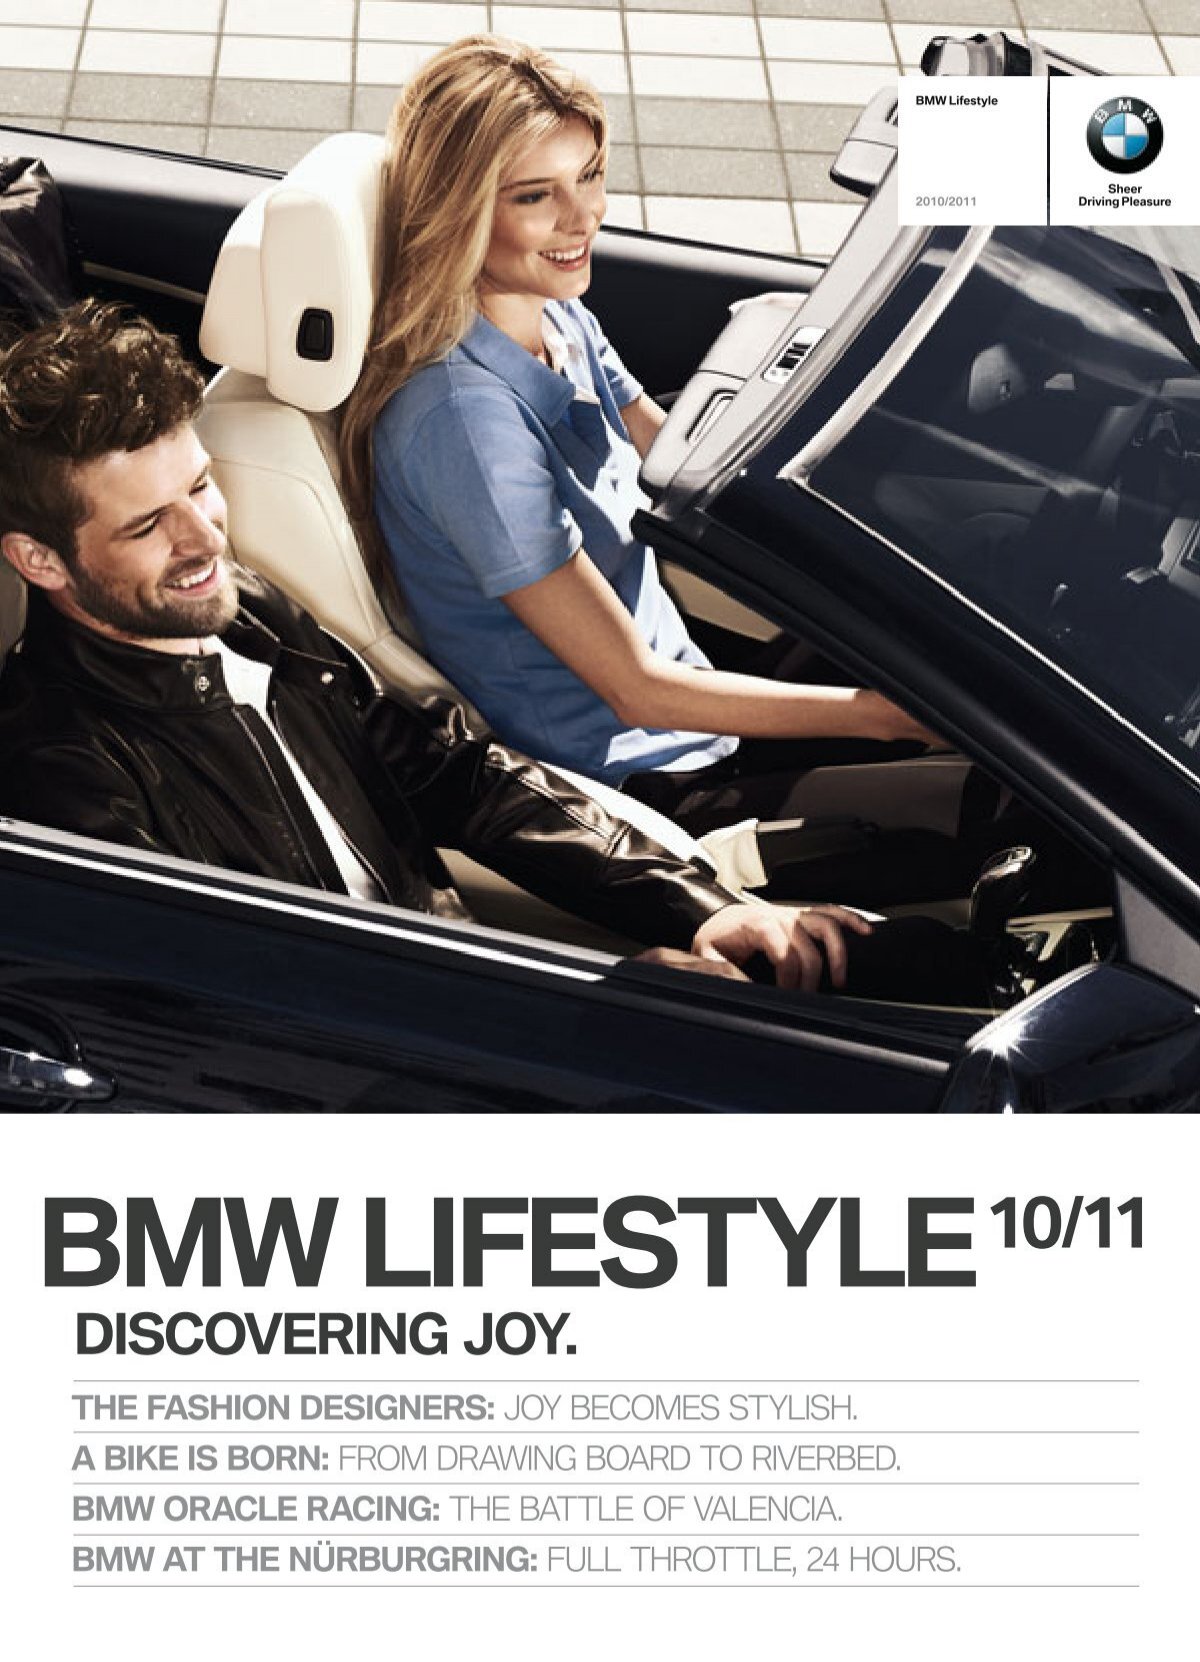 BMW LIFESTYLE 10/11